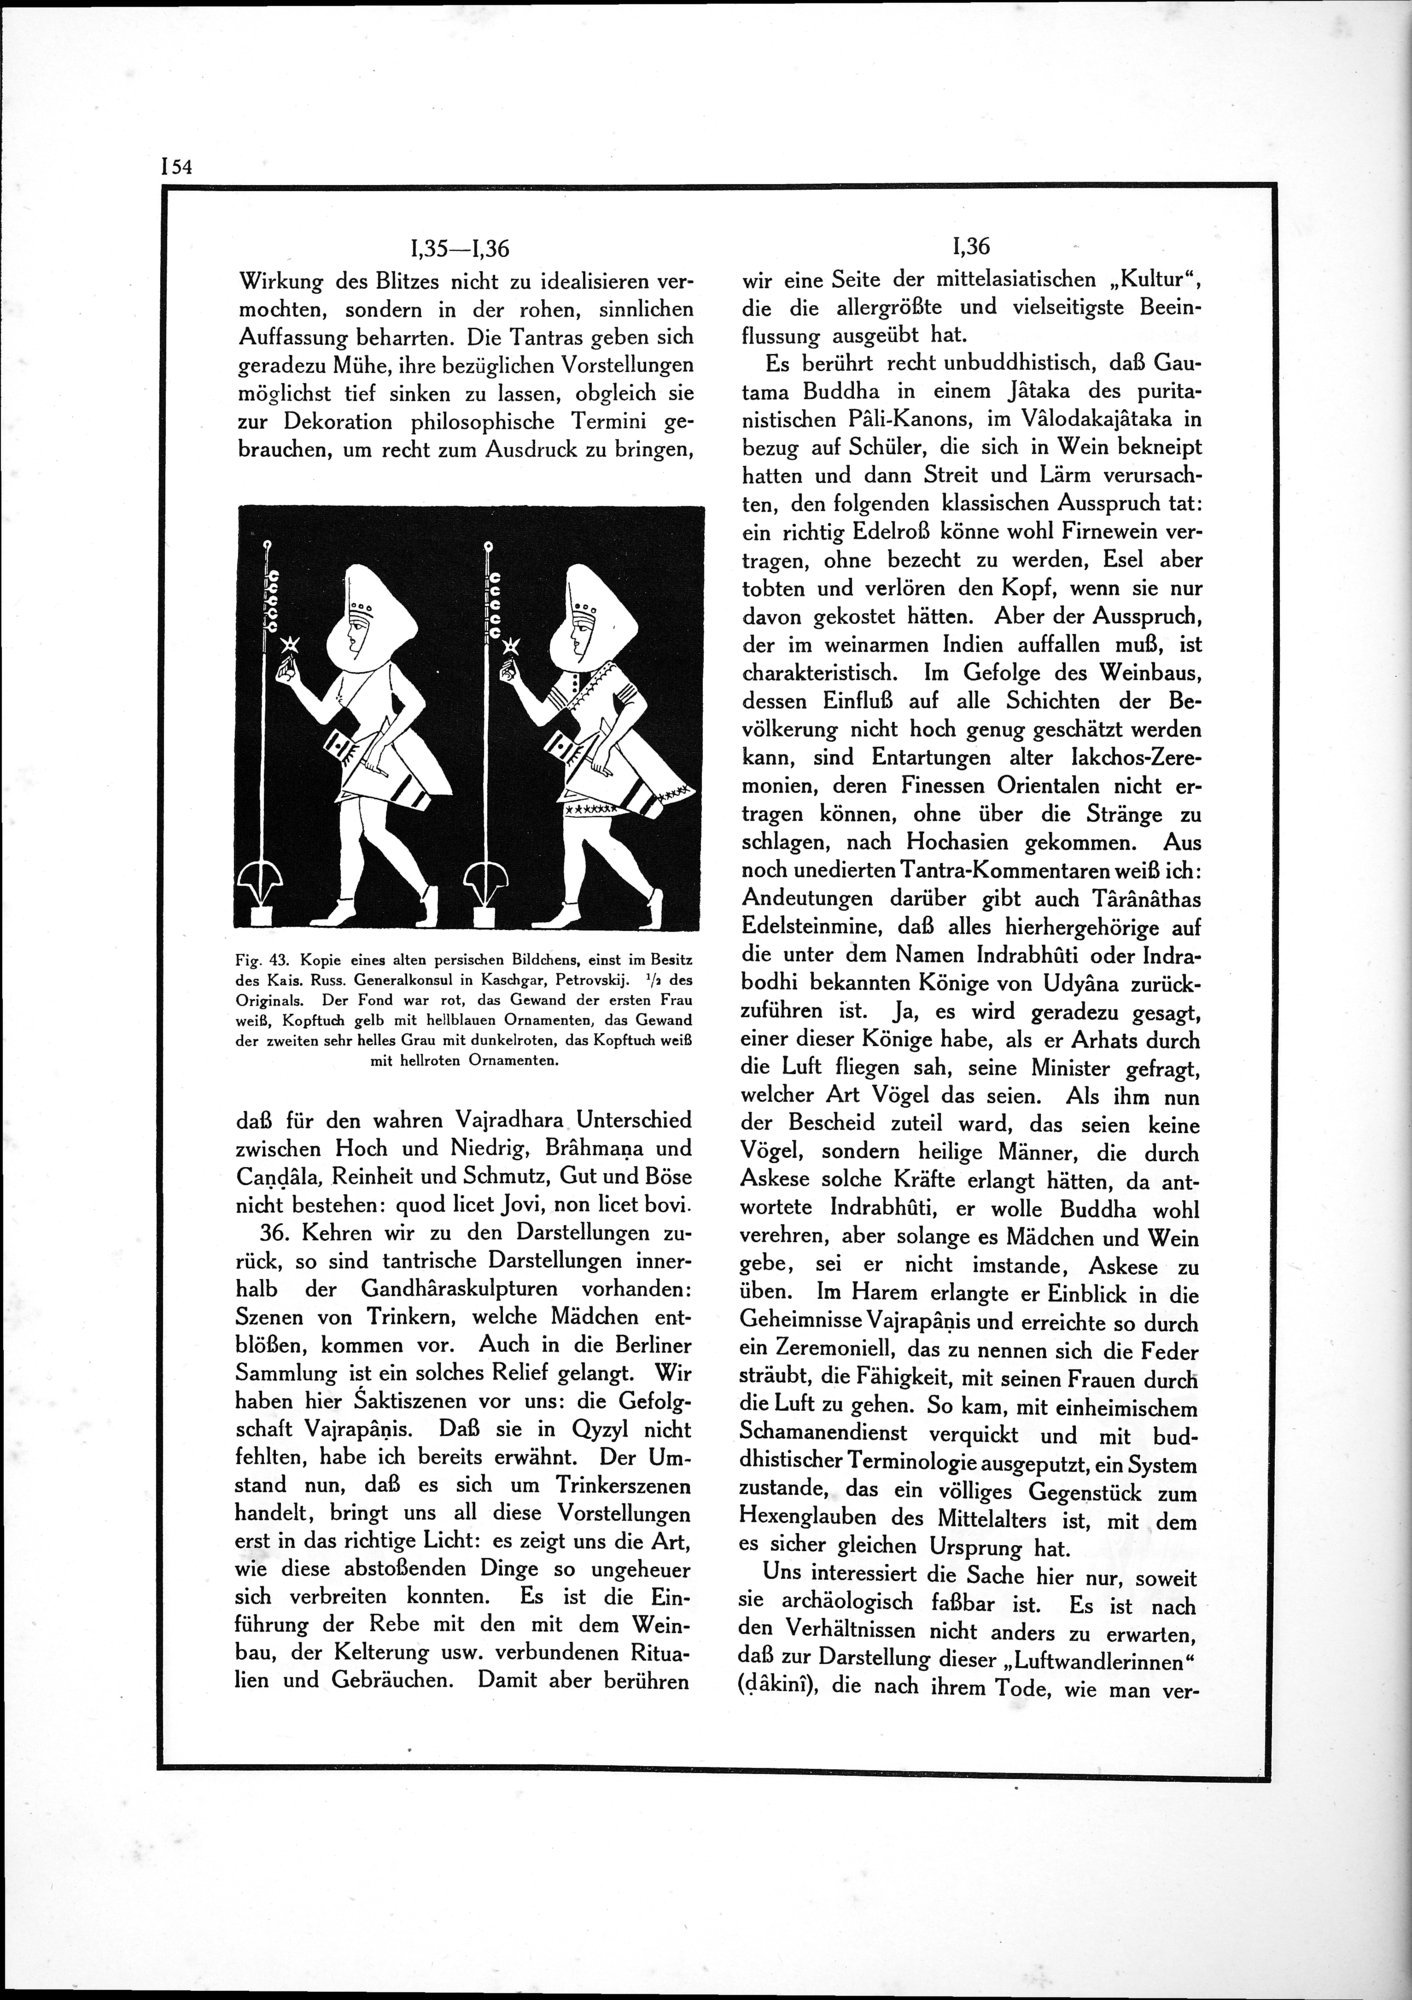 Alt-Kutscha : vol.1 / Page 66 (Grayscale High Resolution Image)